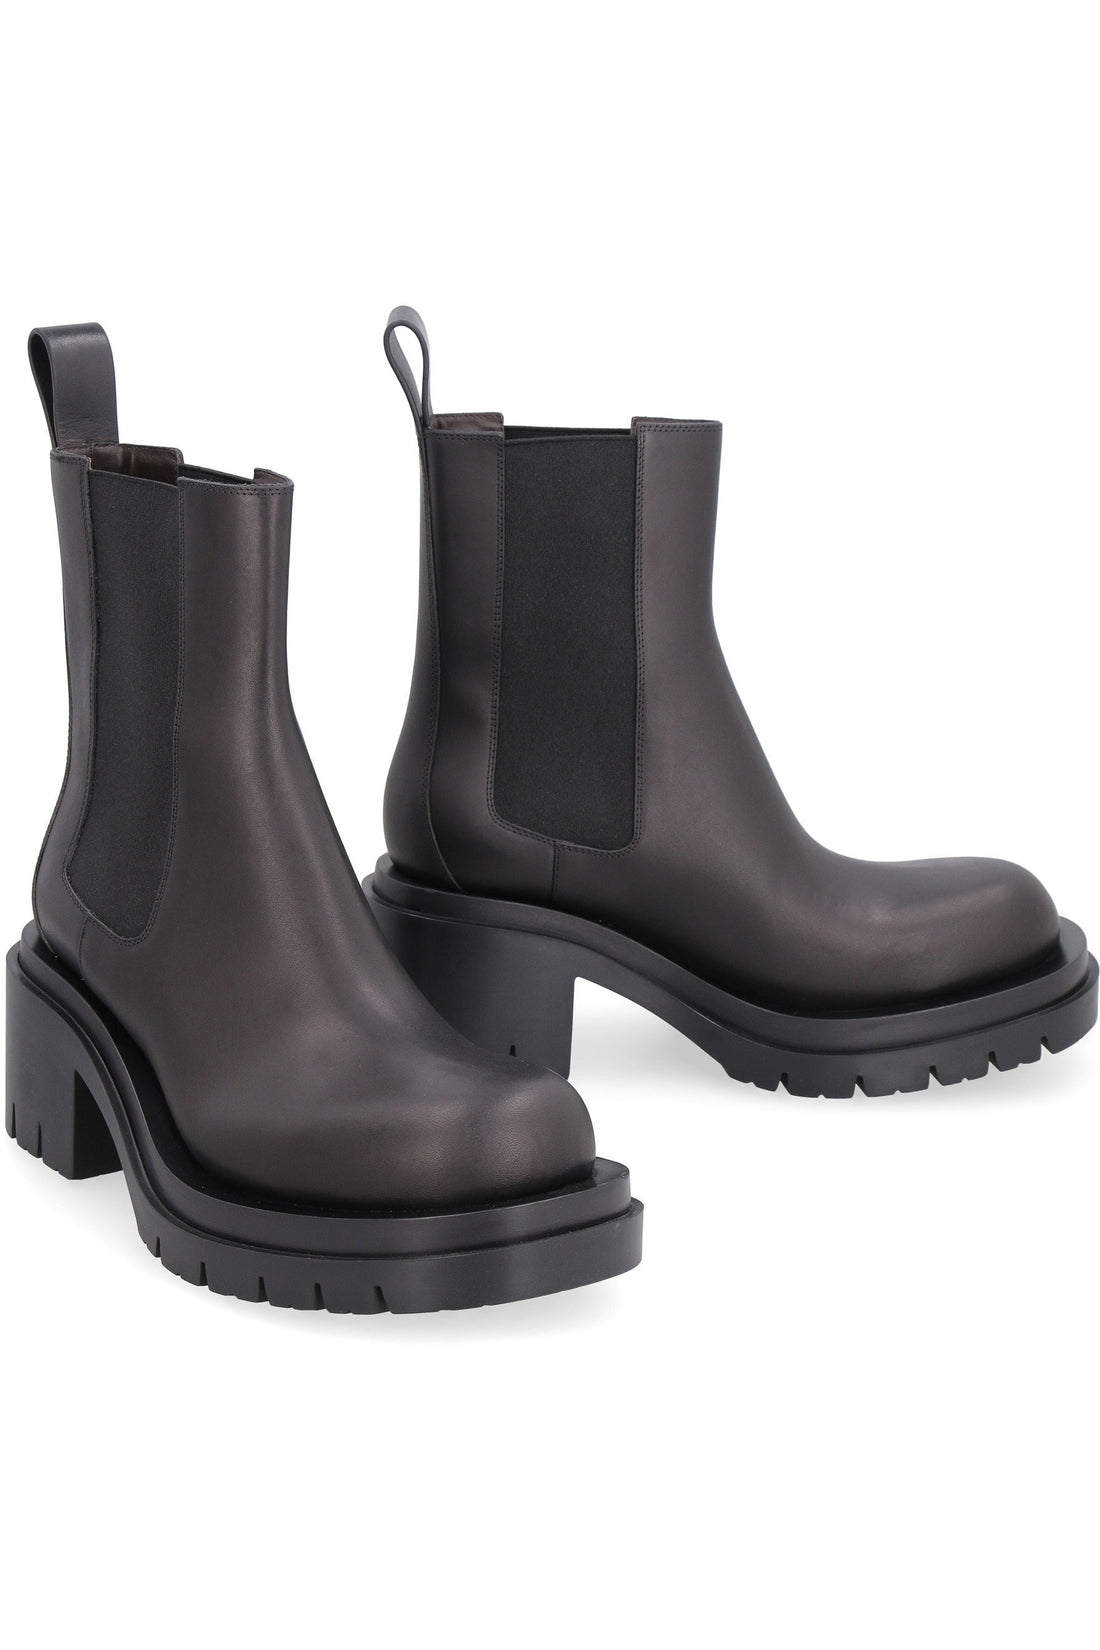 Bottega Veneta-OUTLET-SALE-Lug leather boots-ARCHIVIST